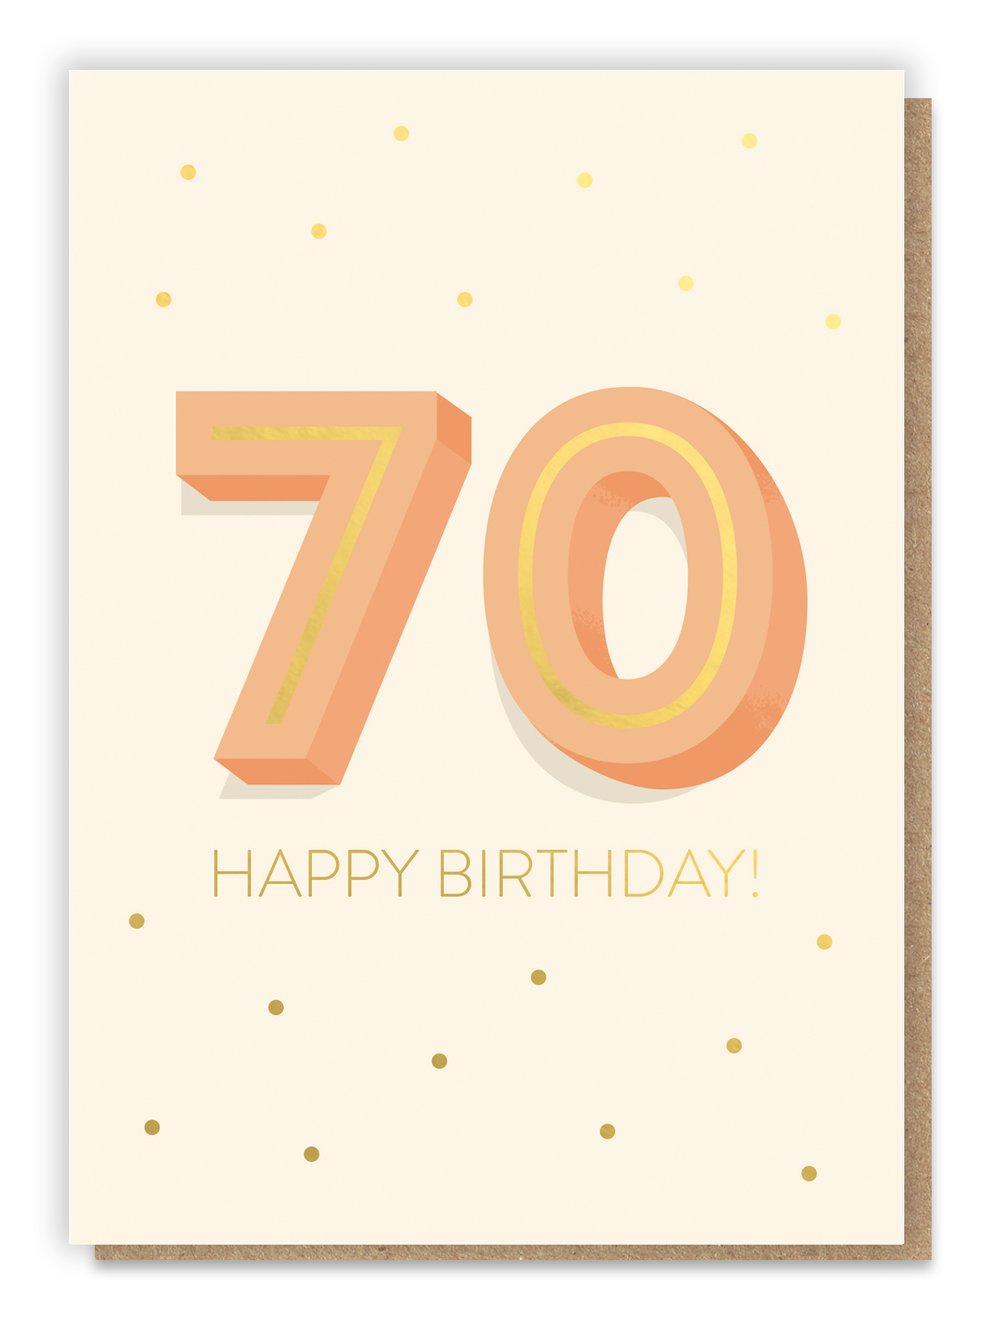 Big 7-0 Birthday Card - Age 70